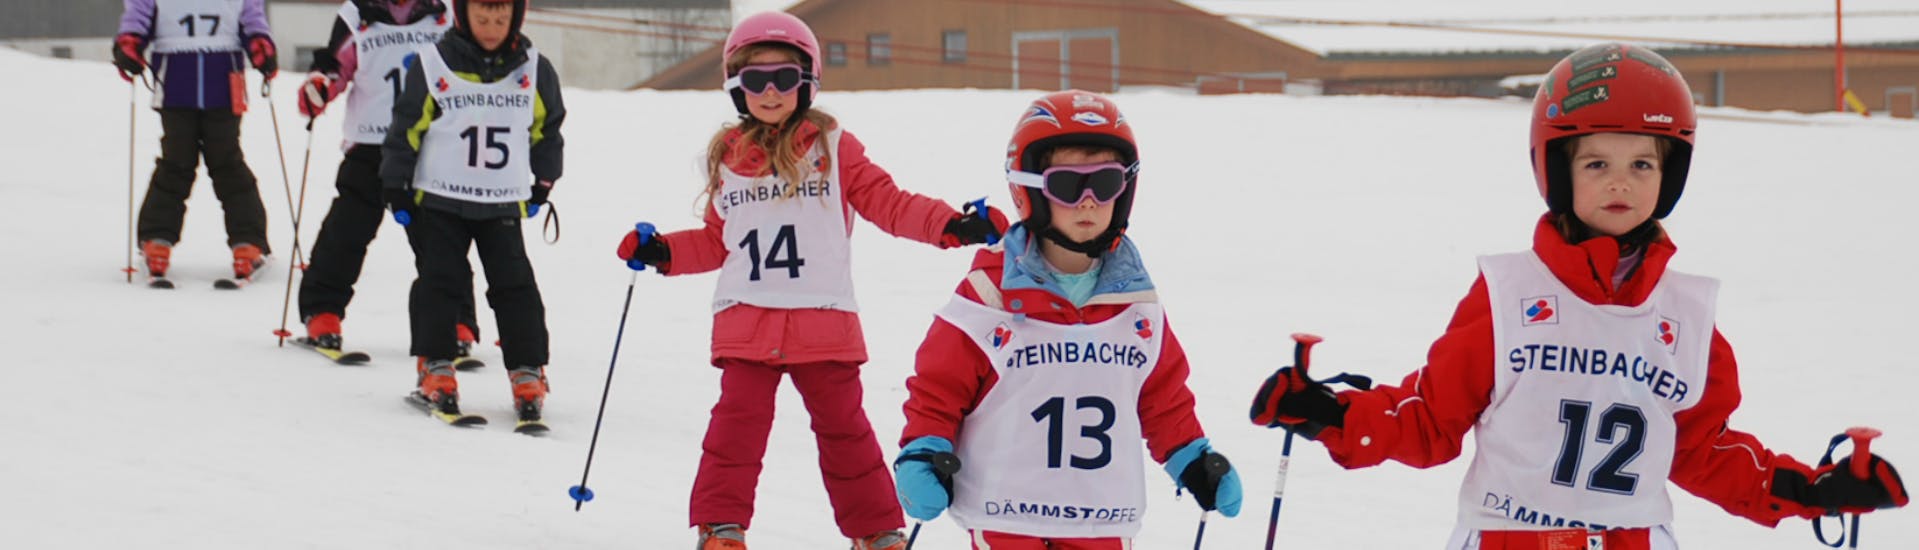 Clases de esquí para niños a partir de 4 años para principiantes con Ski School Ski Total Kirchdorf.